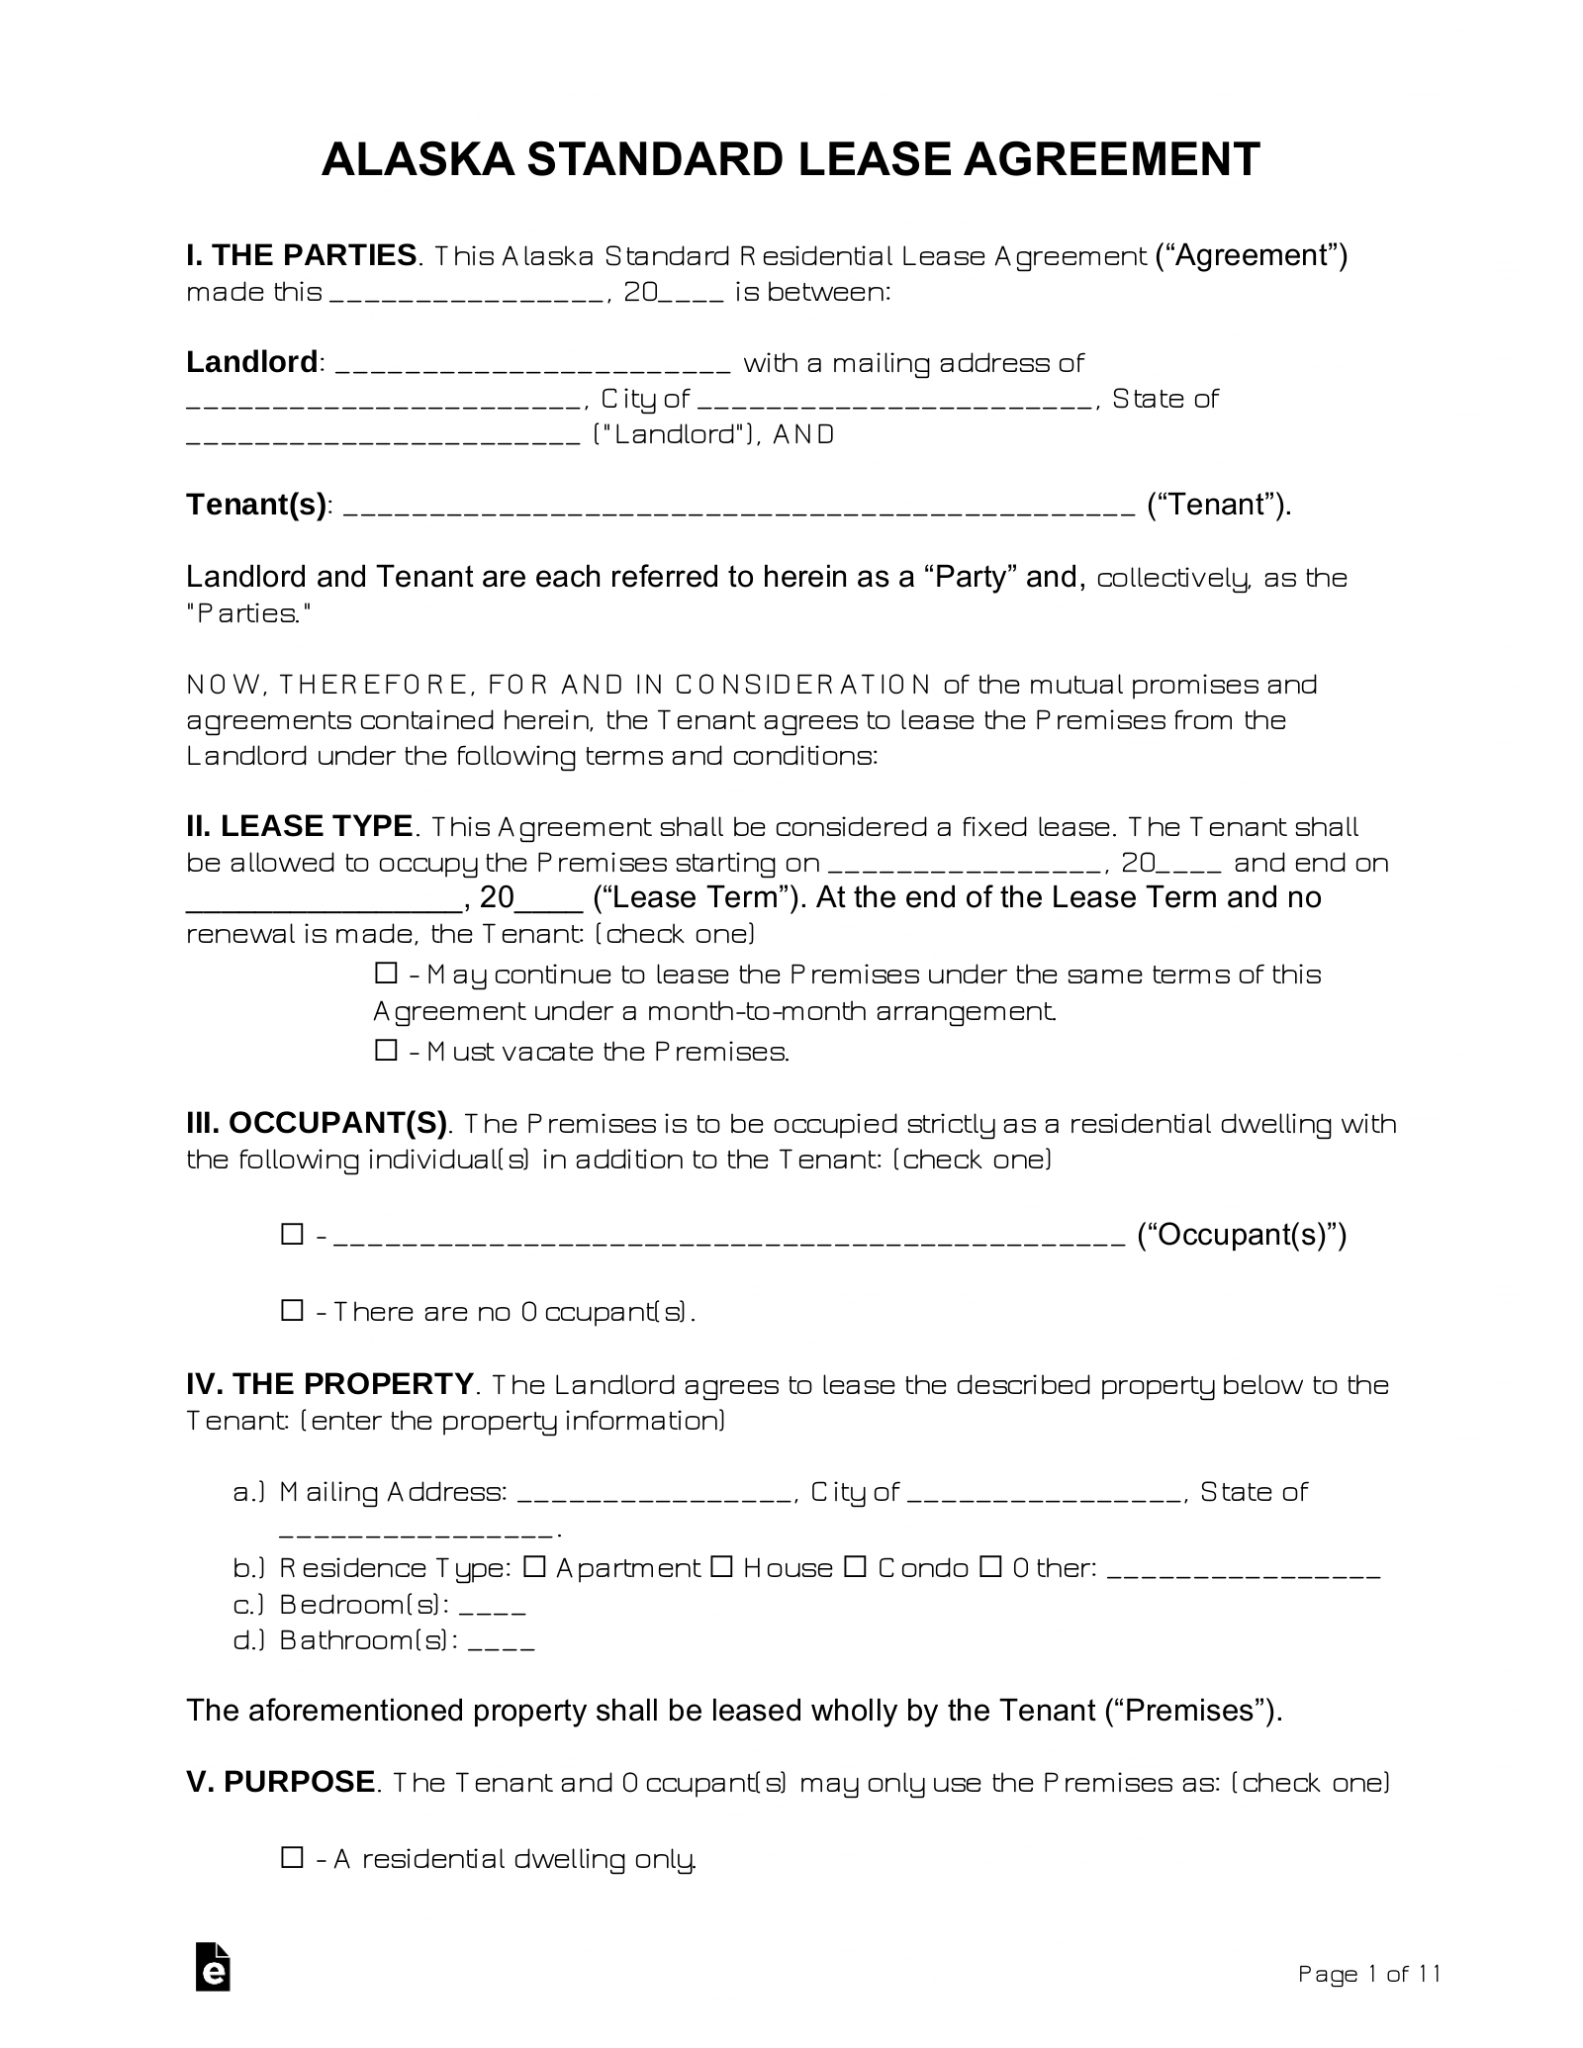 free-alaska-standard-residential-lease-agreement-template-pdf-word